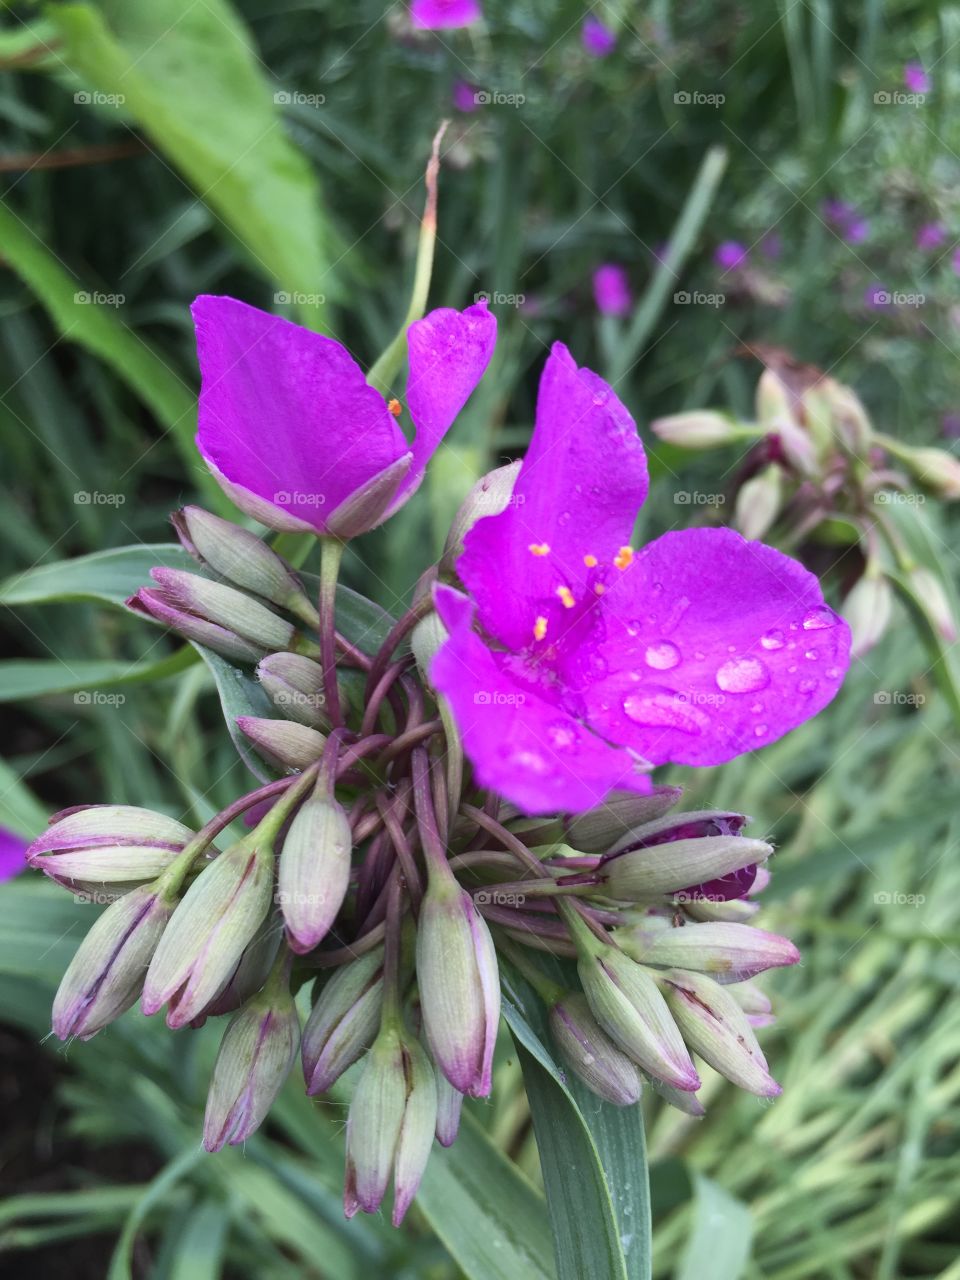 Rain covered purple flower. 